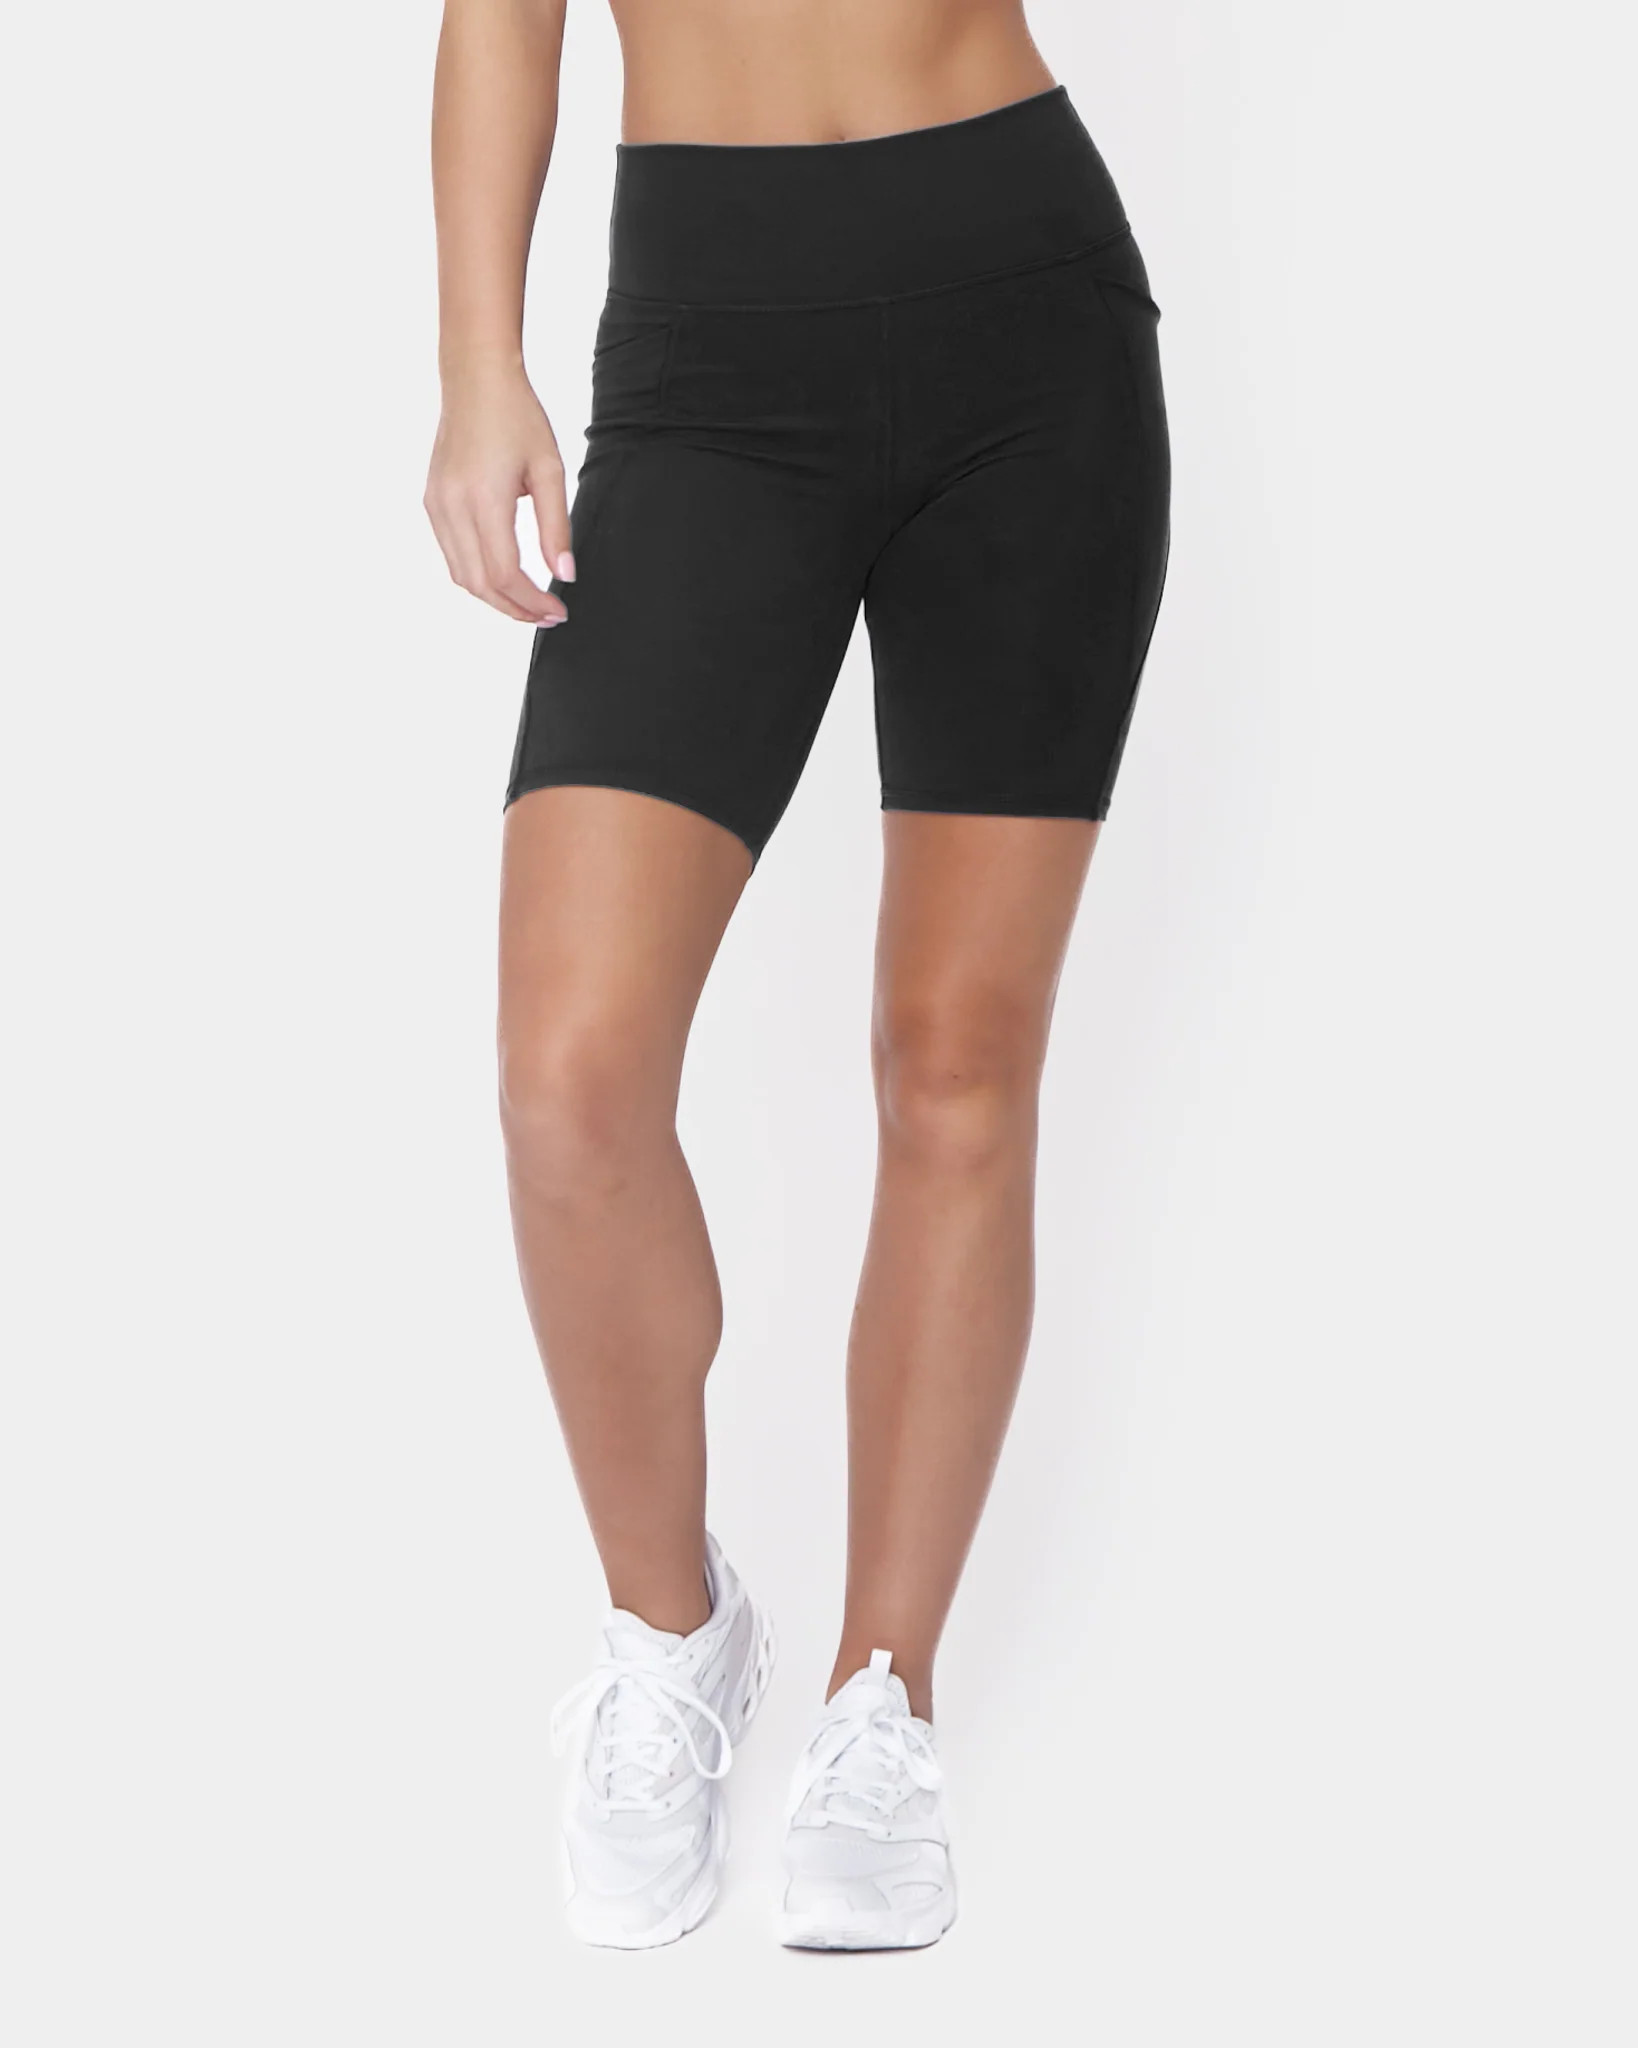 Skin Biker Shorts (8 in. inseam) - Black | Senita Athletics